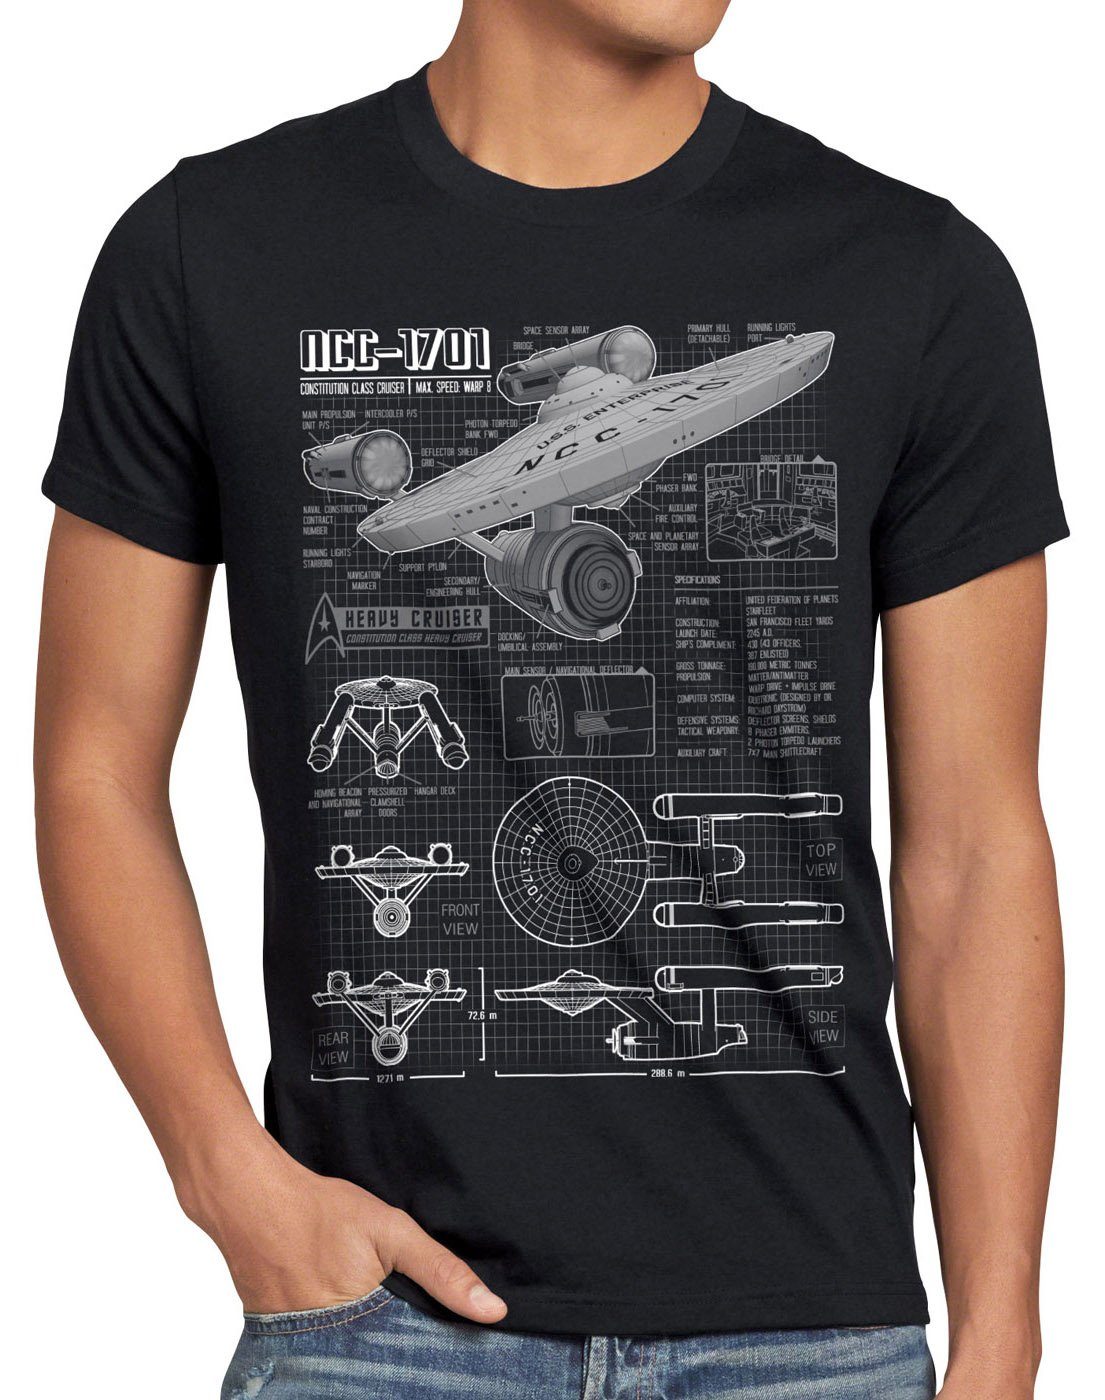 style3 Print-Shirt Herren T-Shirt NCC-1701 christopher pike trek trekkie star sternenflotte klingon schwarz